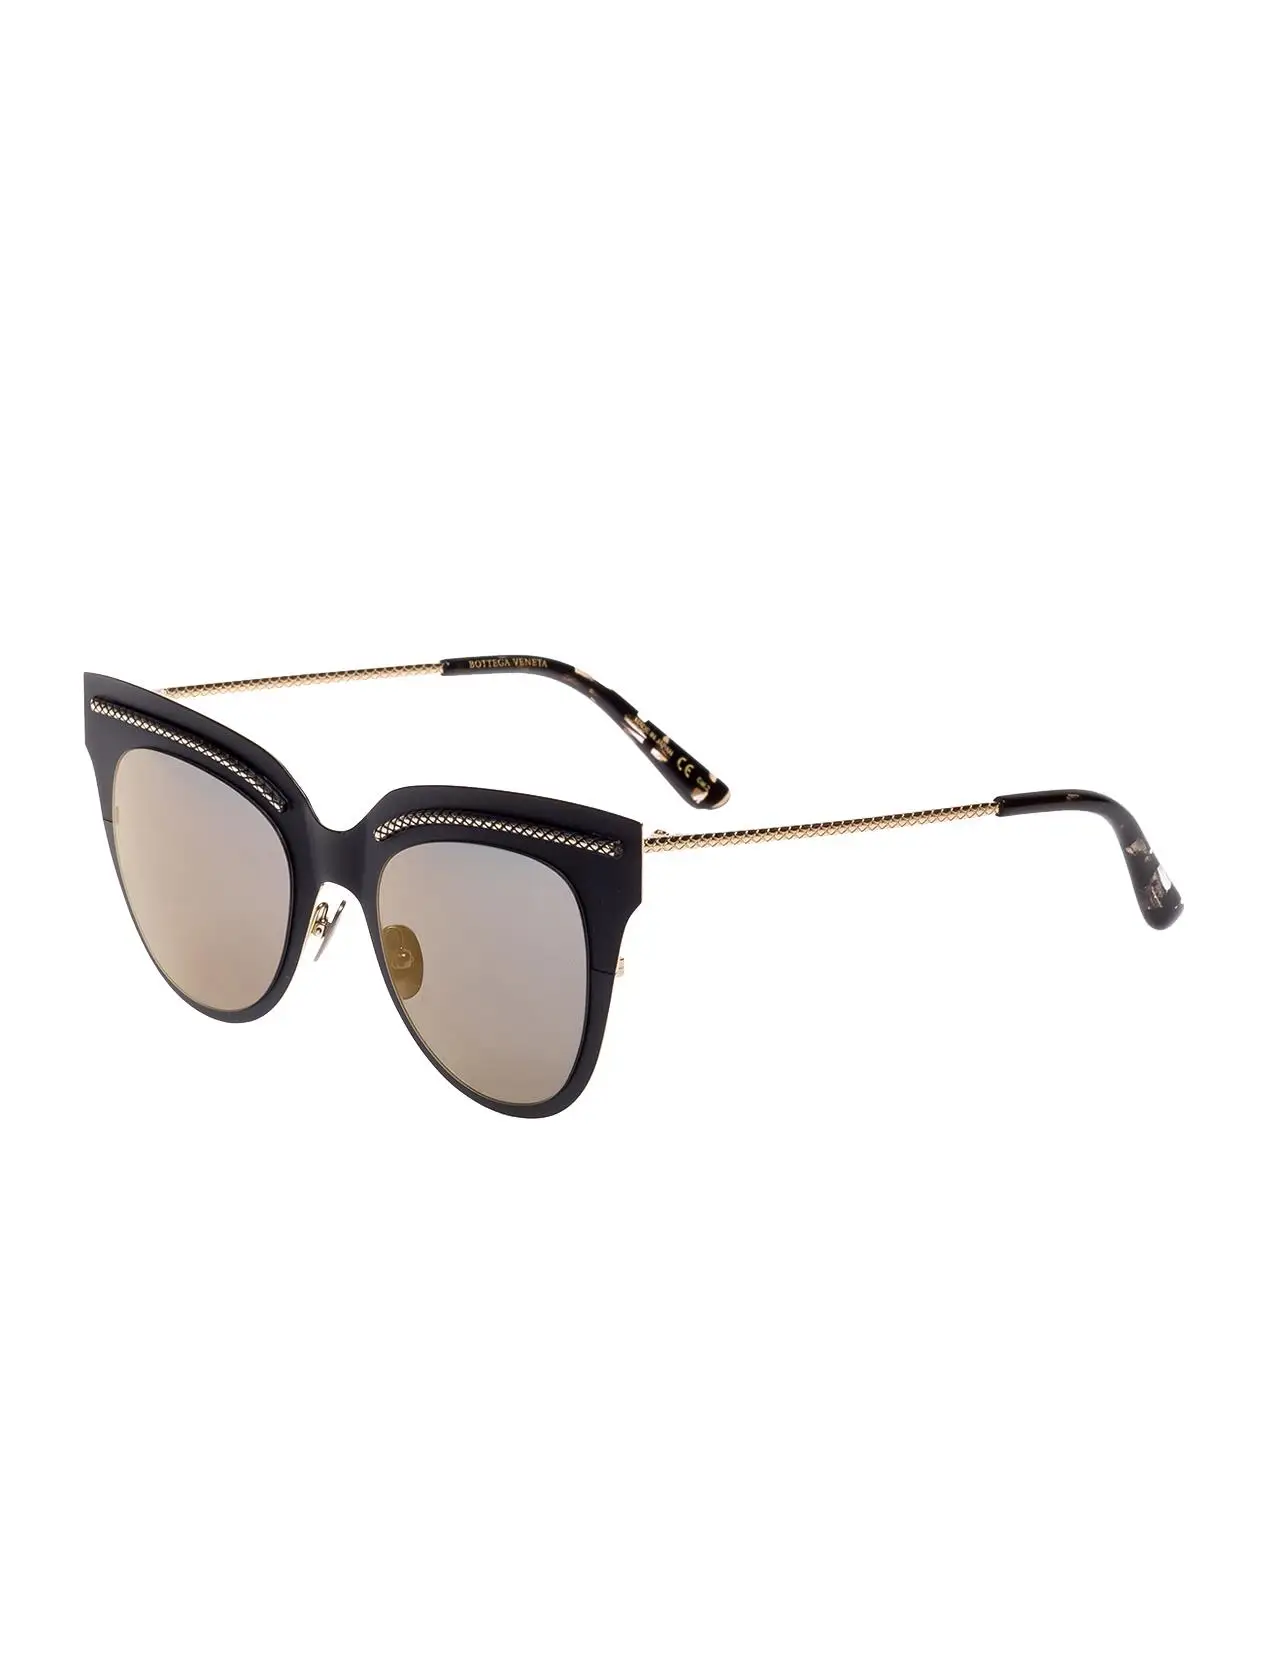 

Women's sunglasses b.v 0029s 002 metal black organic oval cat eye 50-22-140 bottega veneta